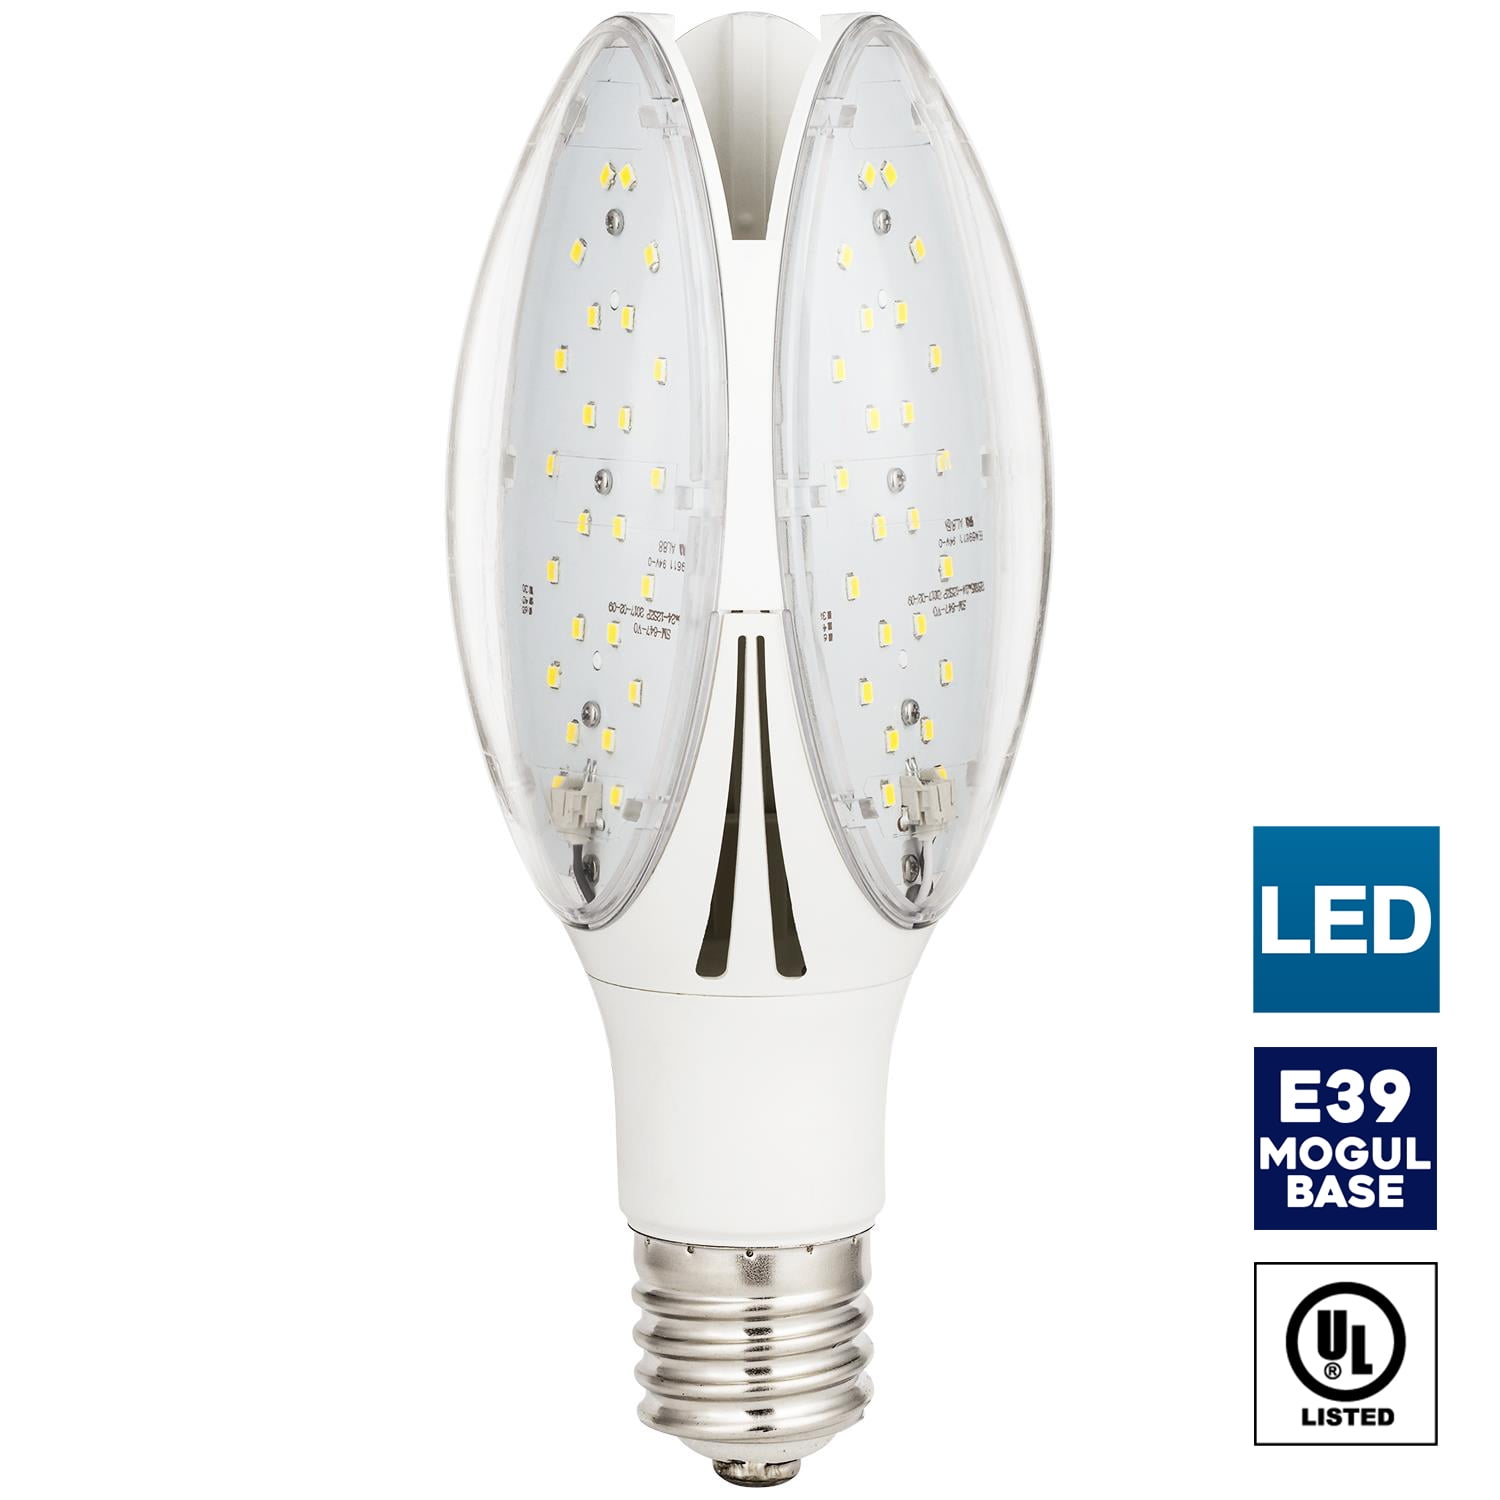 10x 12v AC Intermatic Landscape light DC G4 Base 24 LEDs Bulb for Malibu 